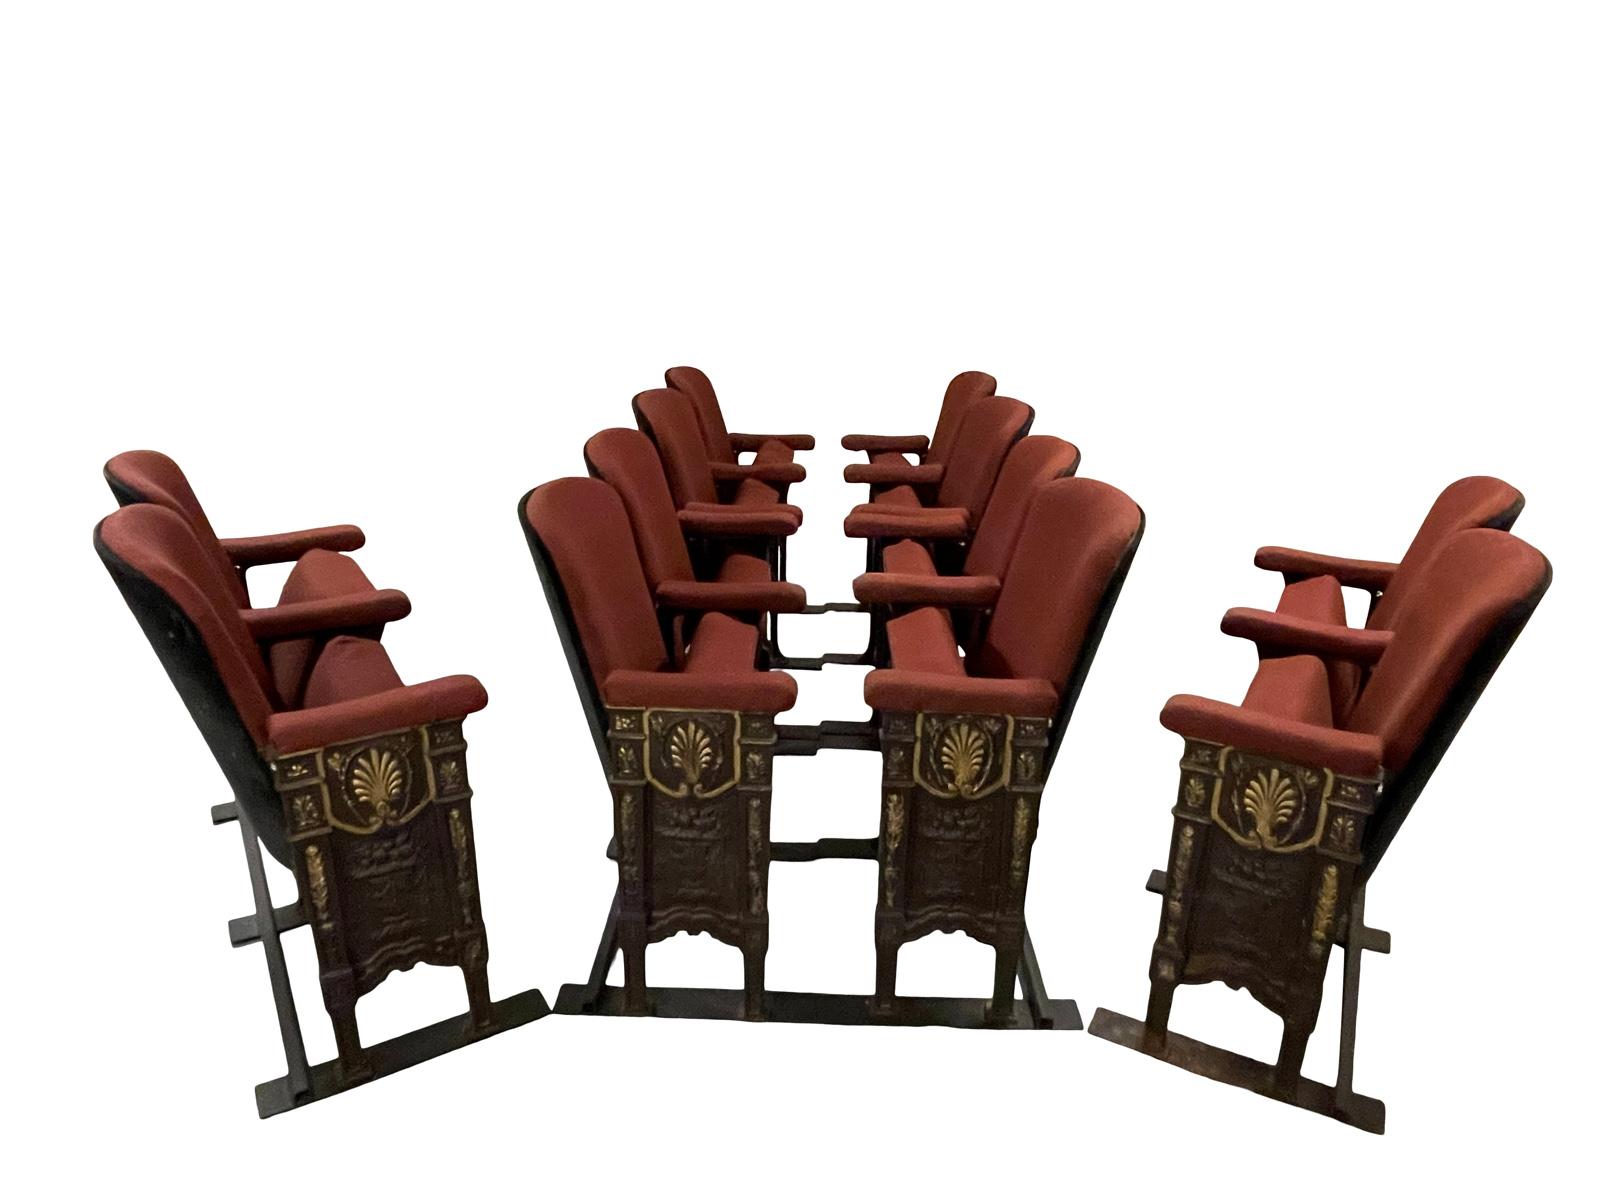 American Original Studio54 Newyork Art Deco Theater Seating Chairs